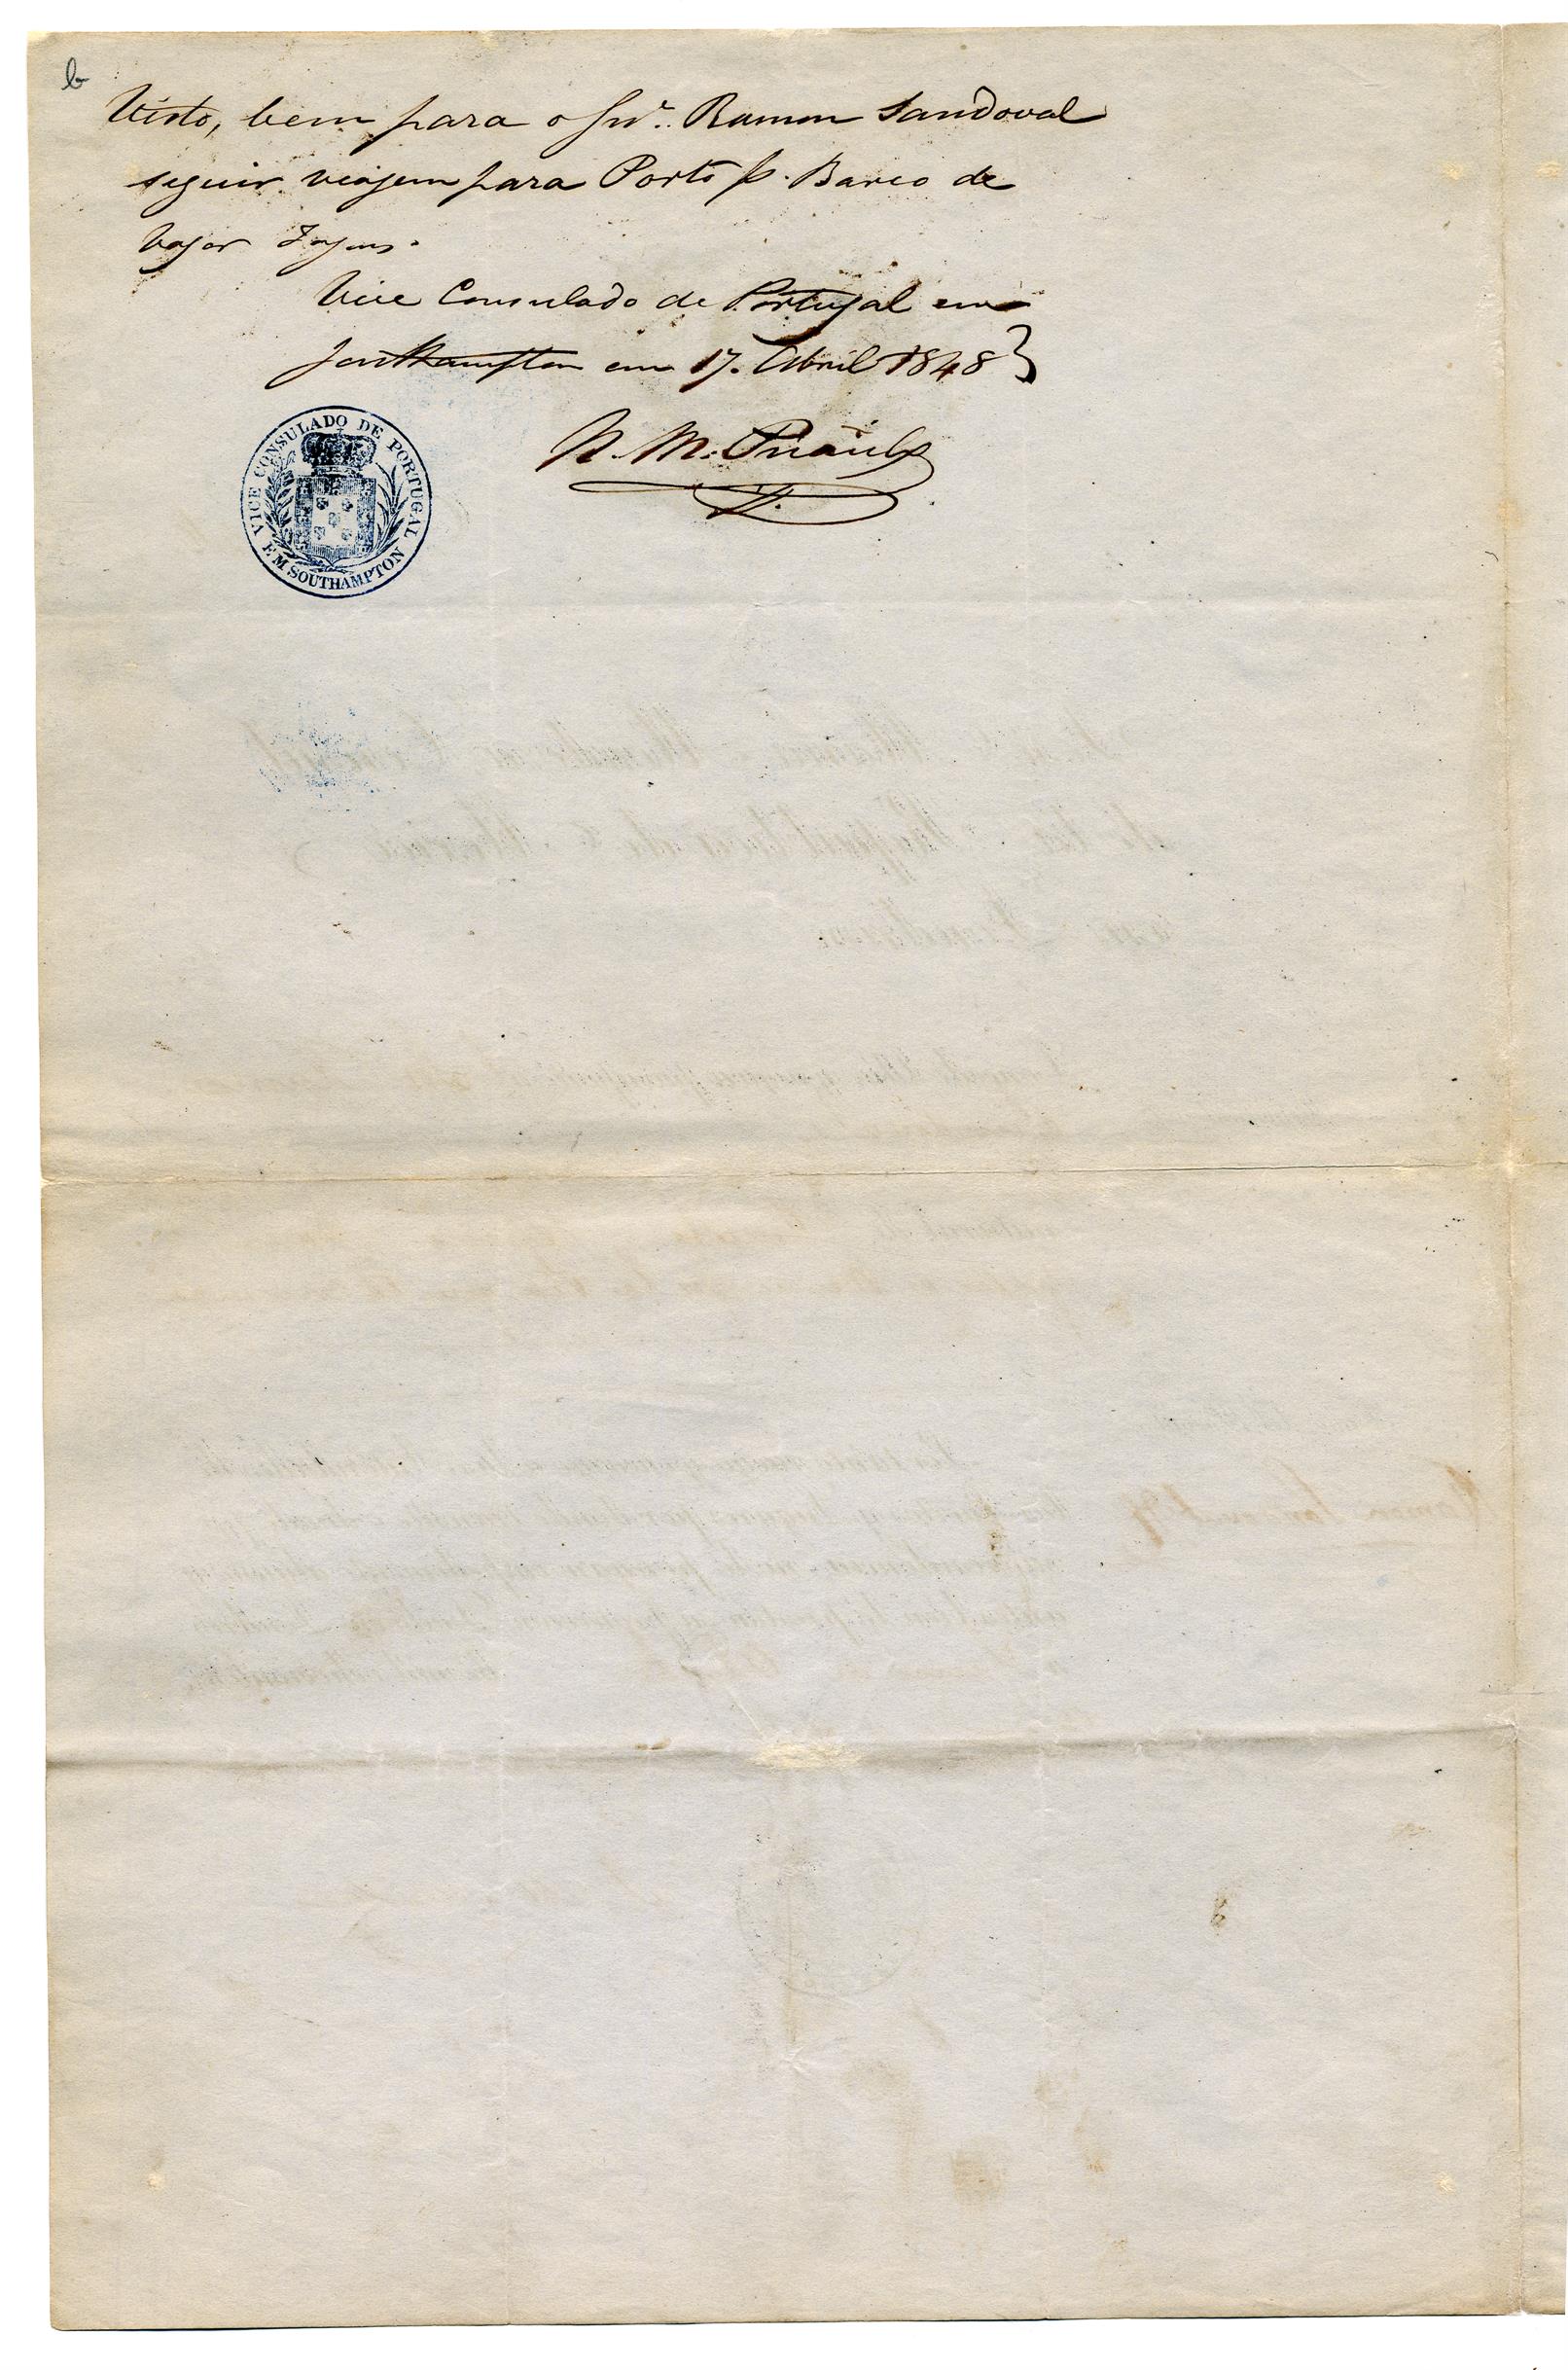 Passaporte de Ramón Sandoval